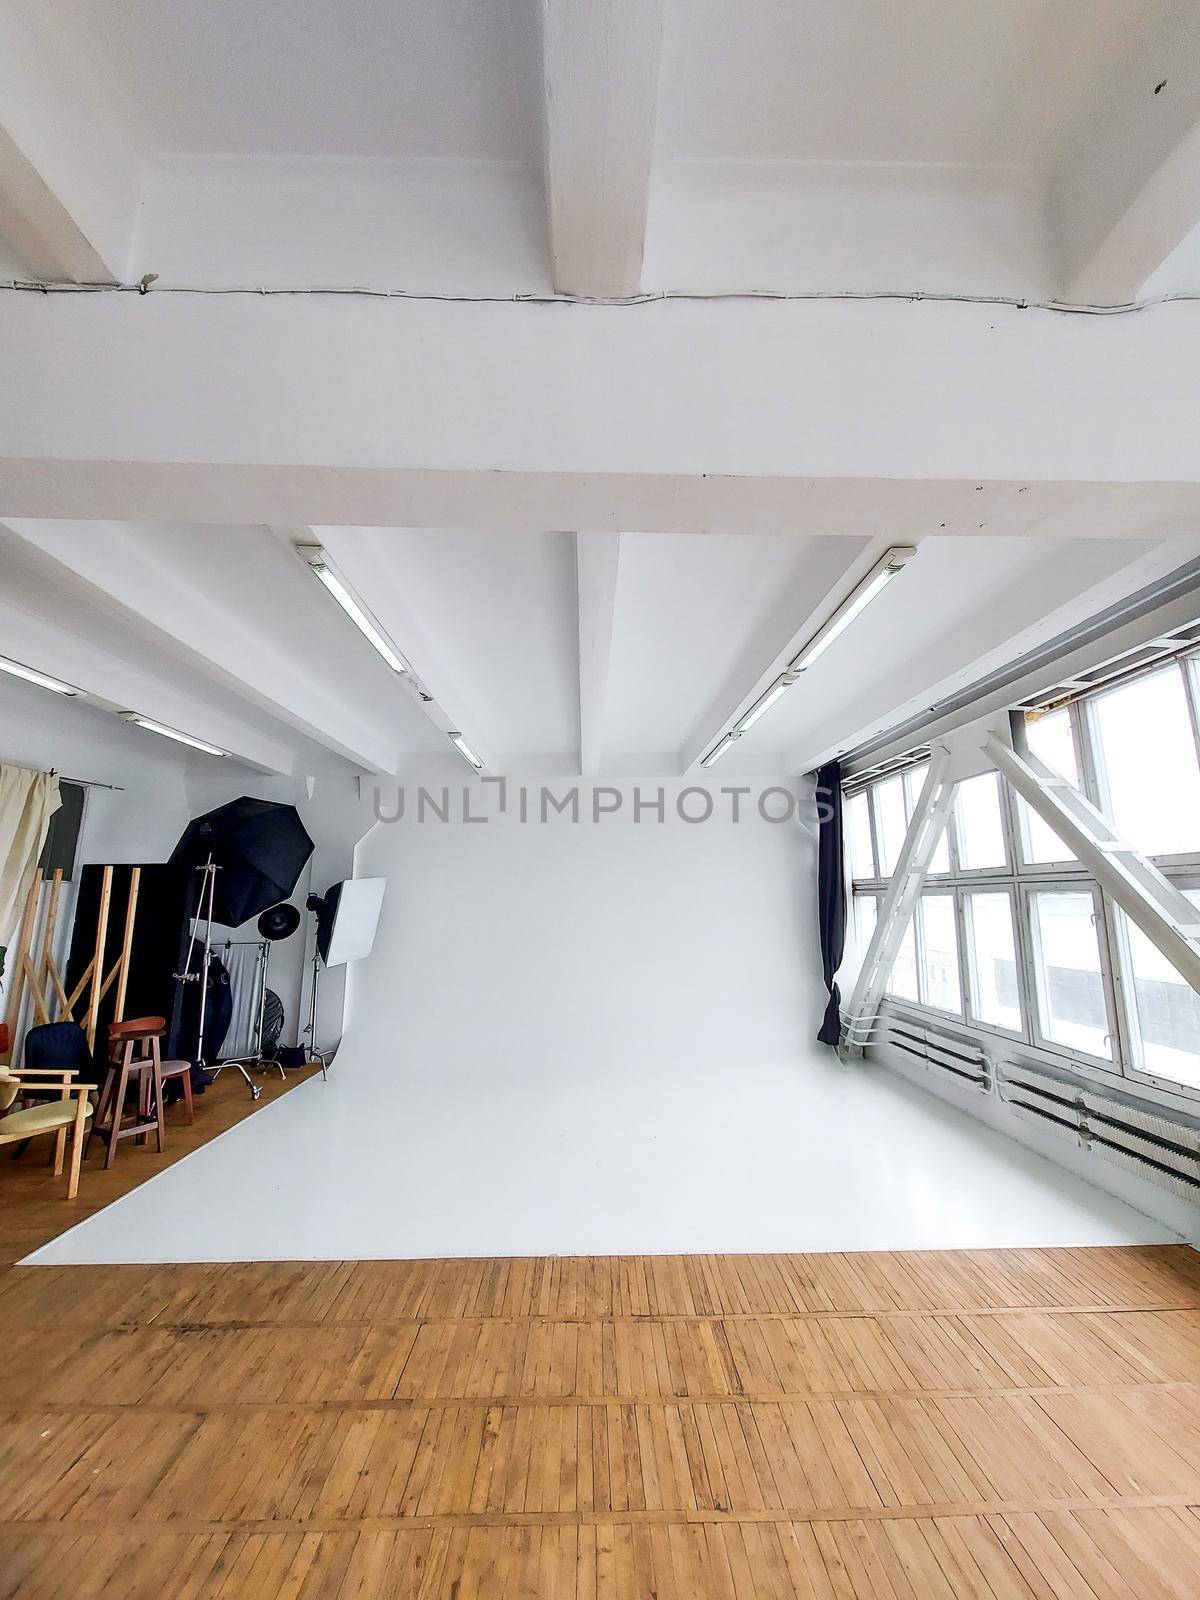 Large daylight photo studio with cyclorama and large panoramic windows